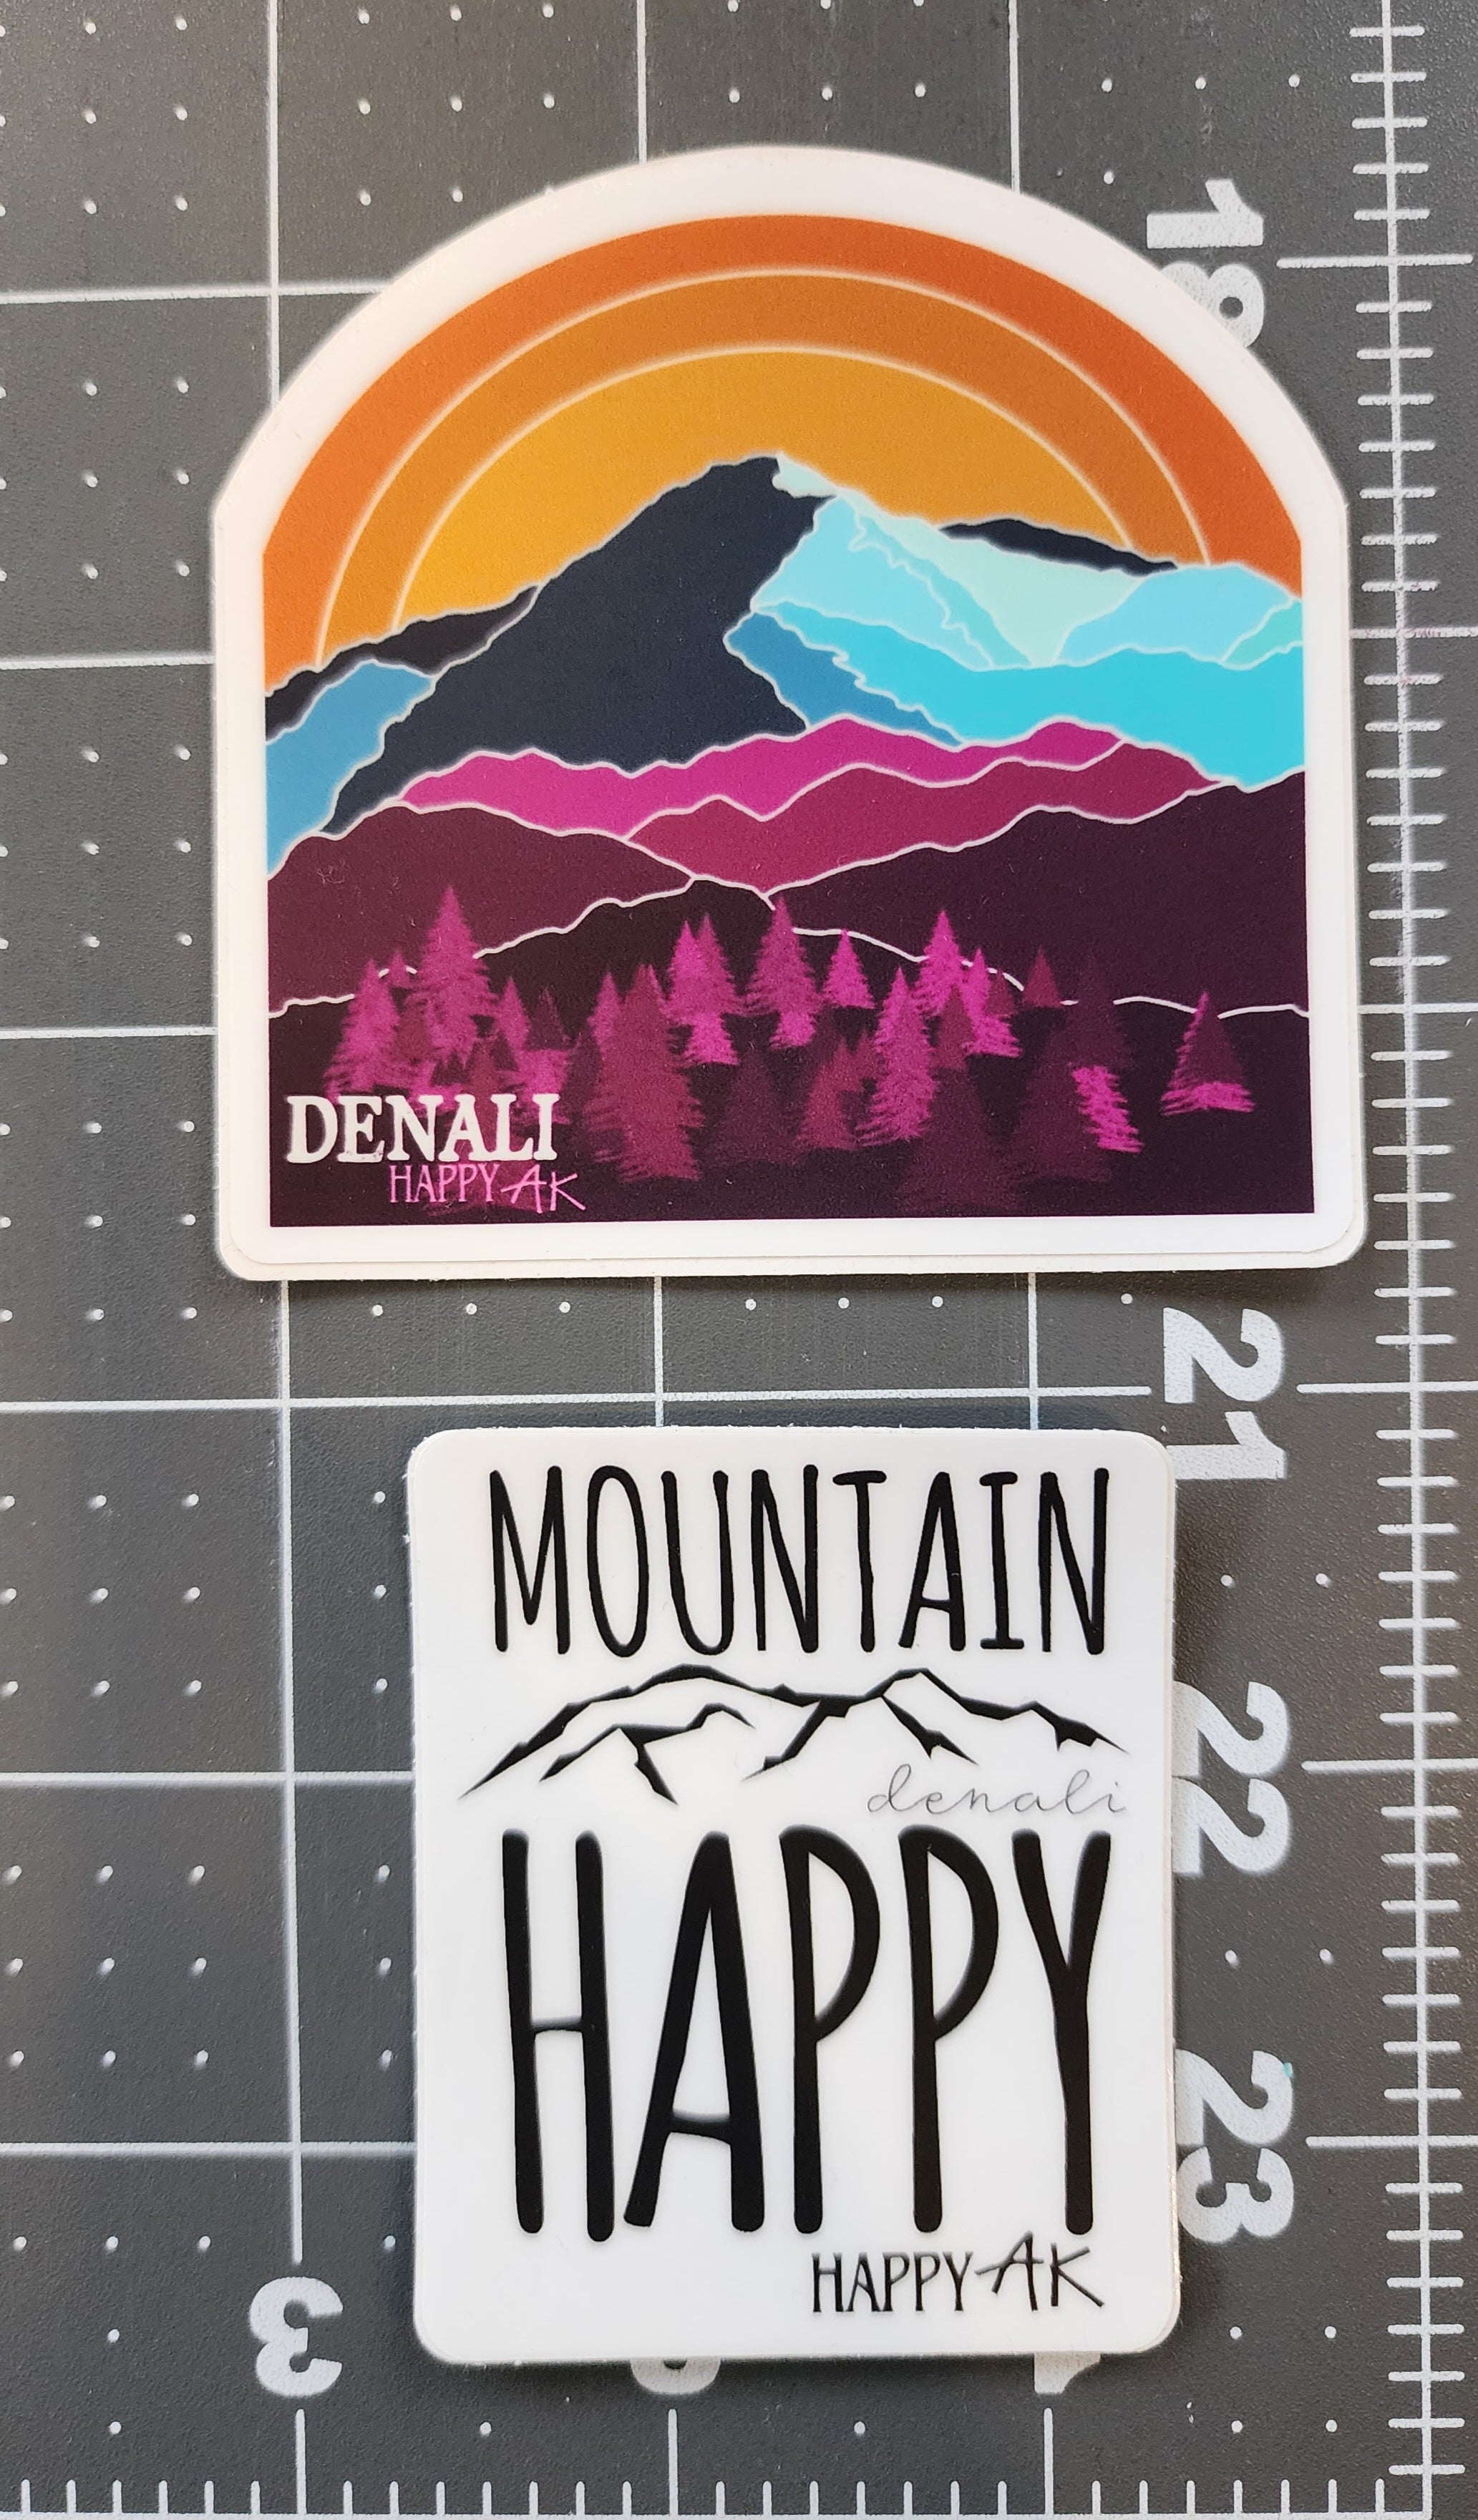 Denali & "Mountain Happy"